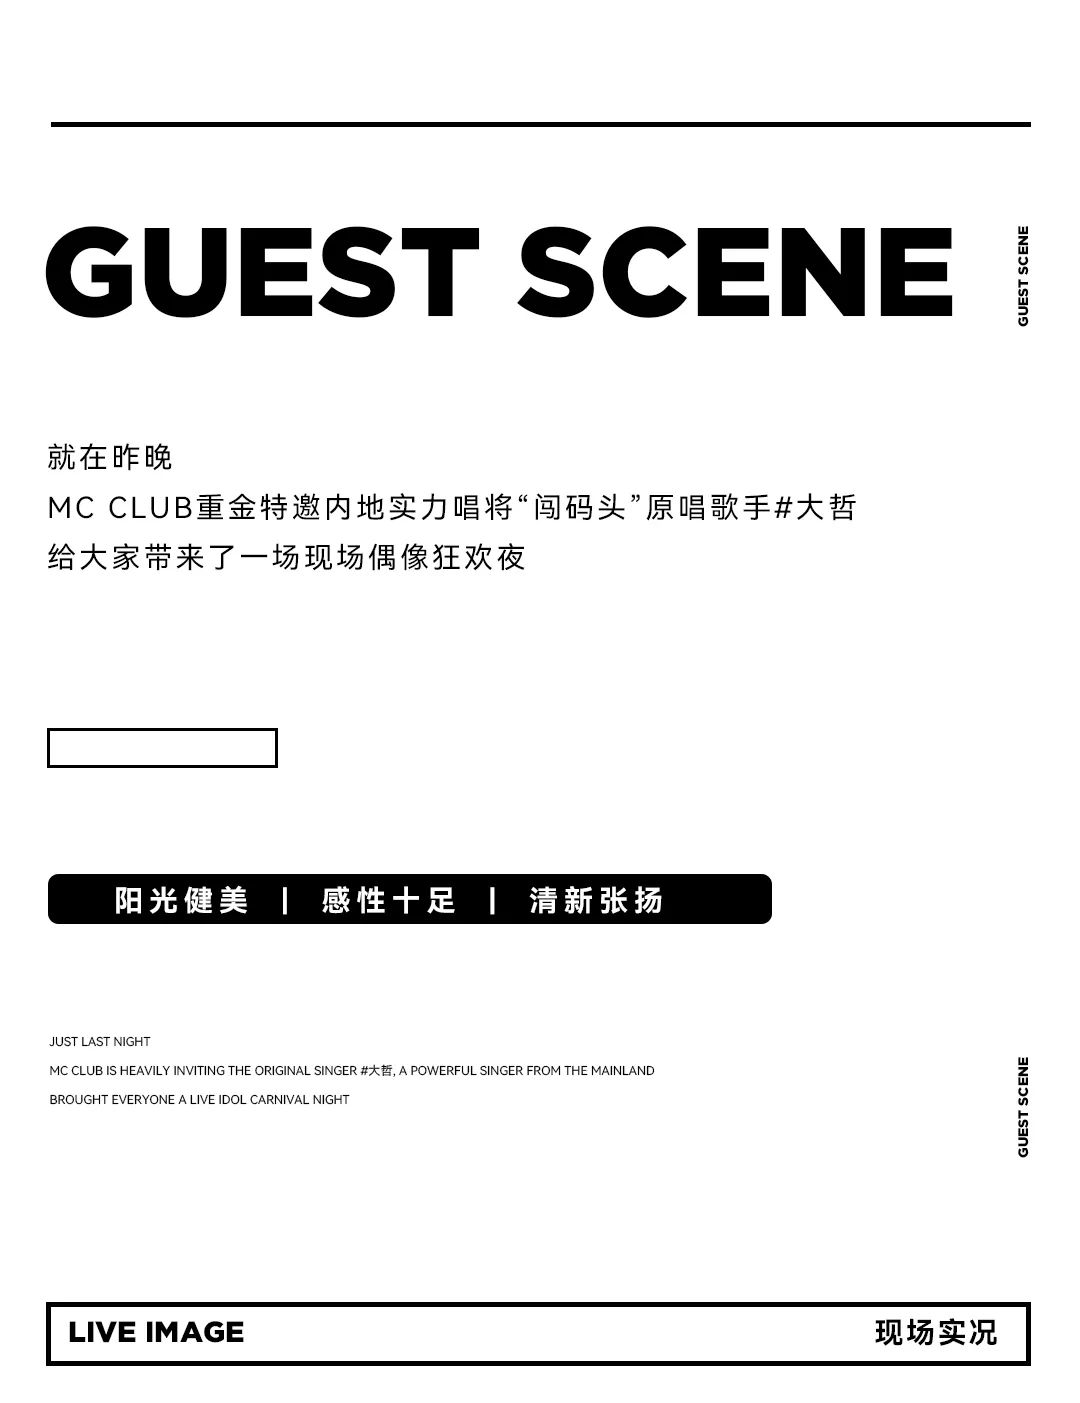 MC CLUB | 内地乐坛实力唱将《闯码头》原唱歌手#大哲精彩回顾-古镇MC CLUB/名臣酒吧